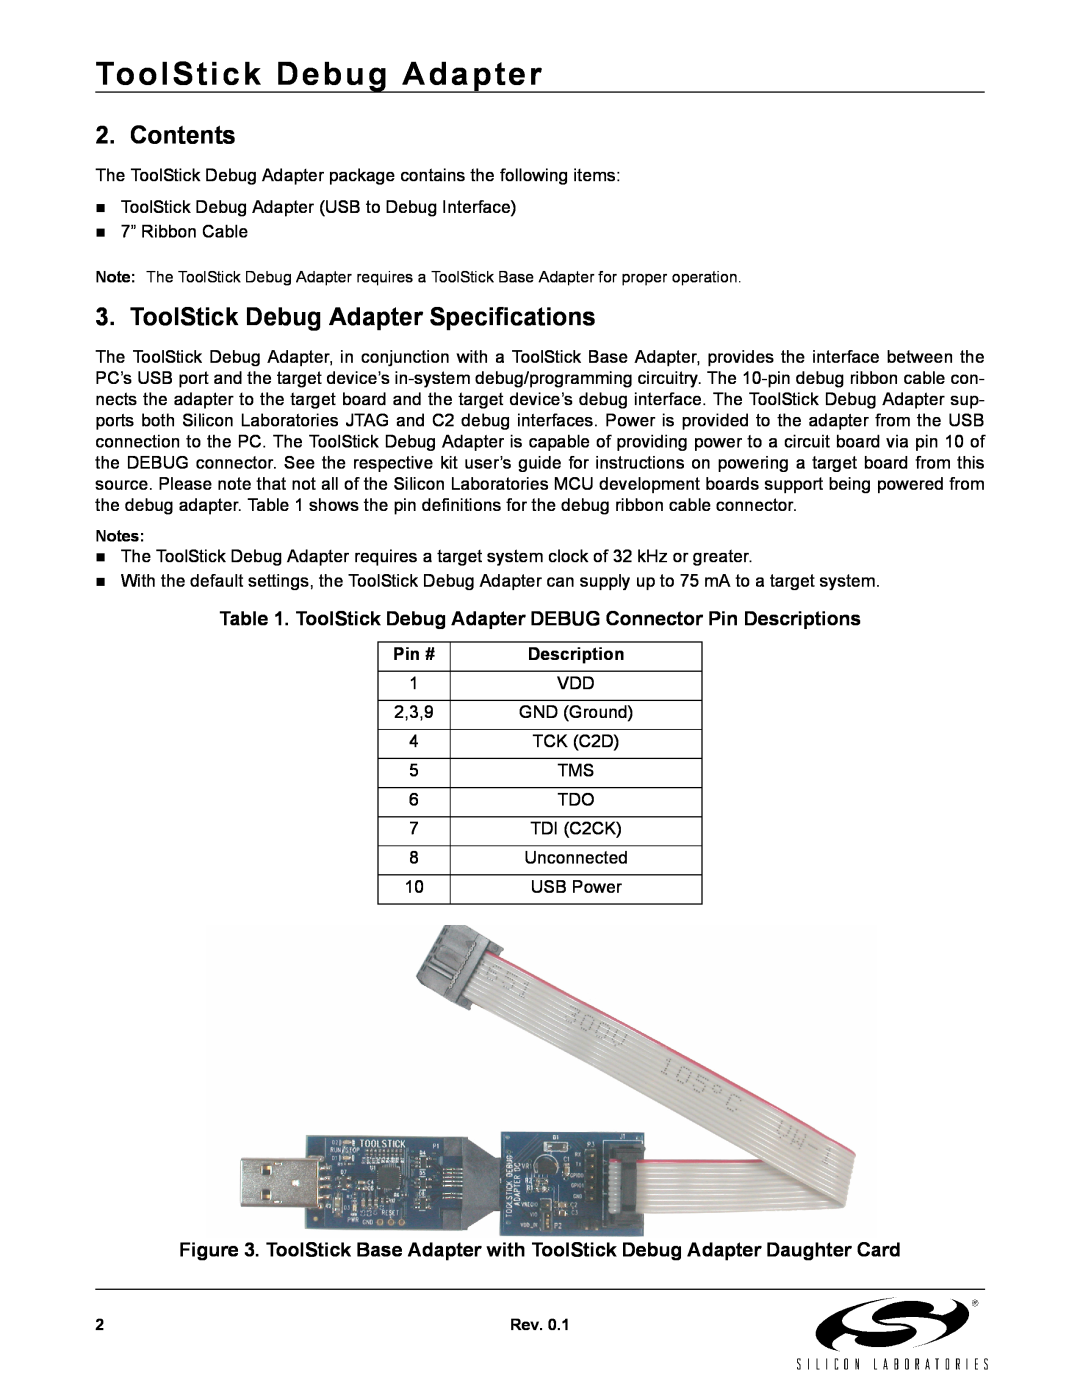 Silicon Laboratories manual Contents, ToolStick Debug Adapter Specifications, Pin #, Description 